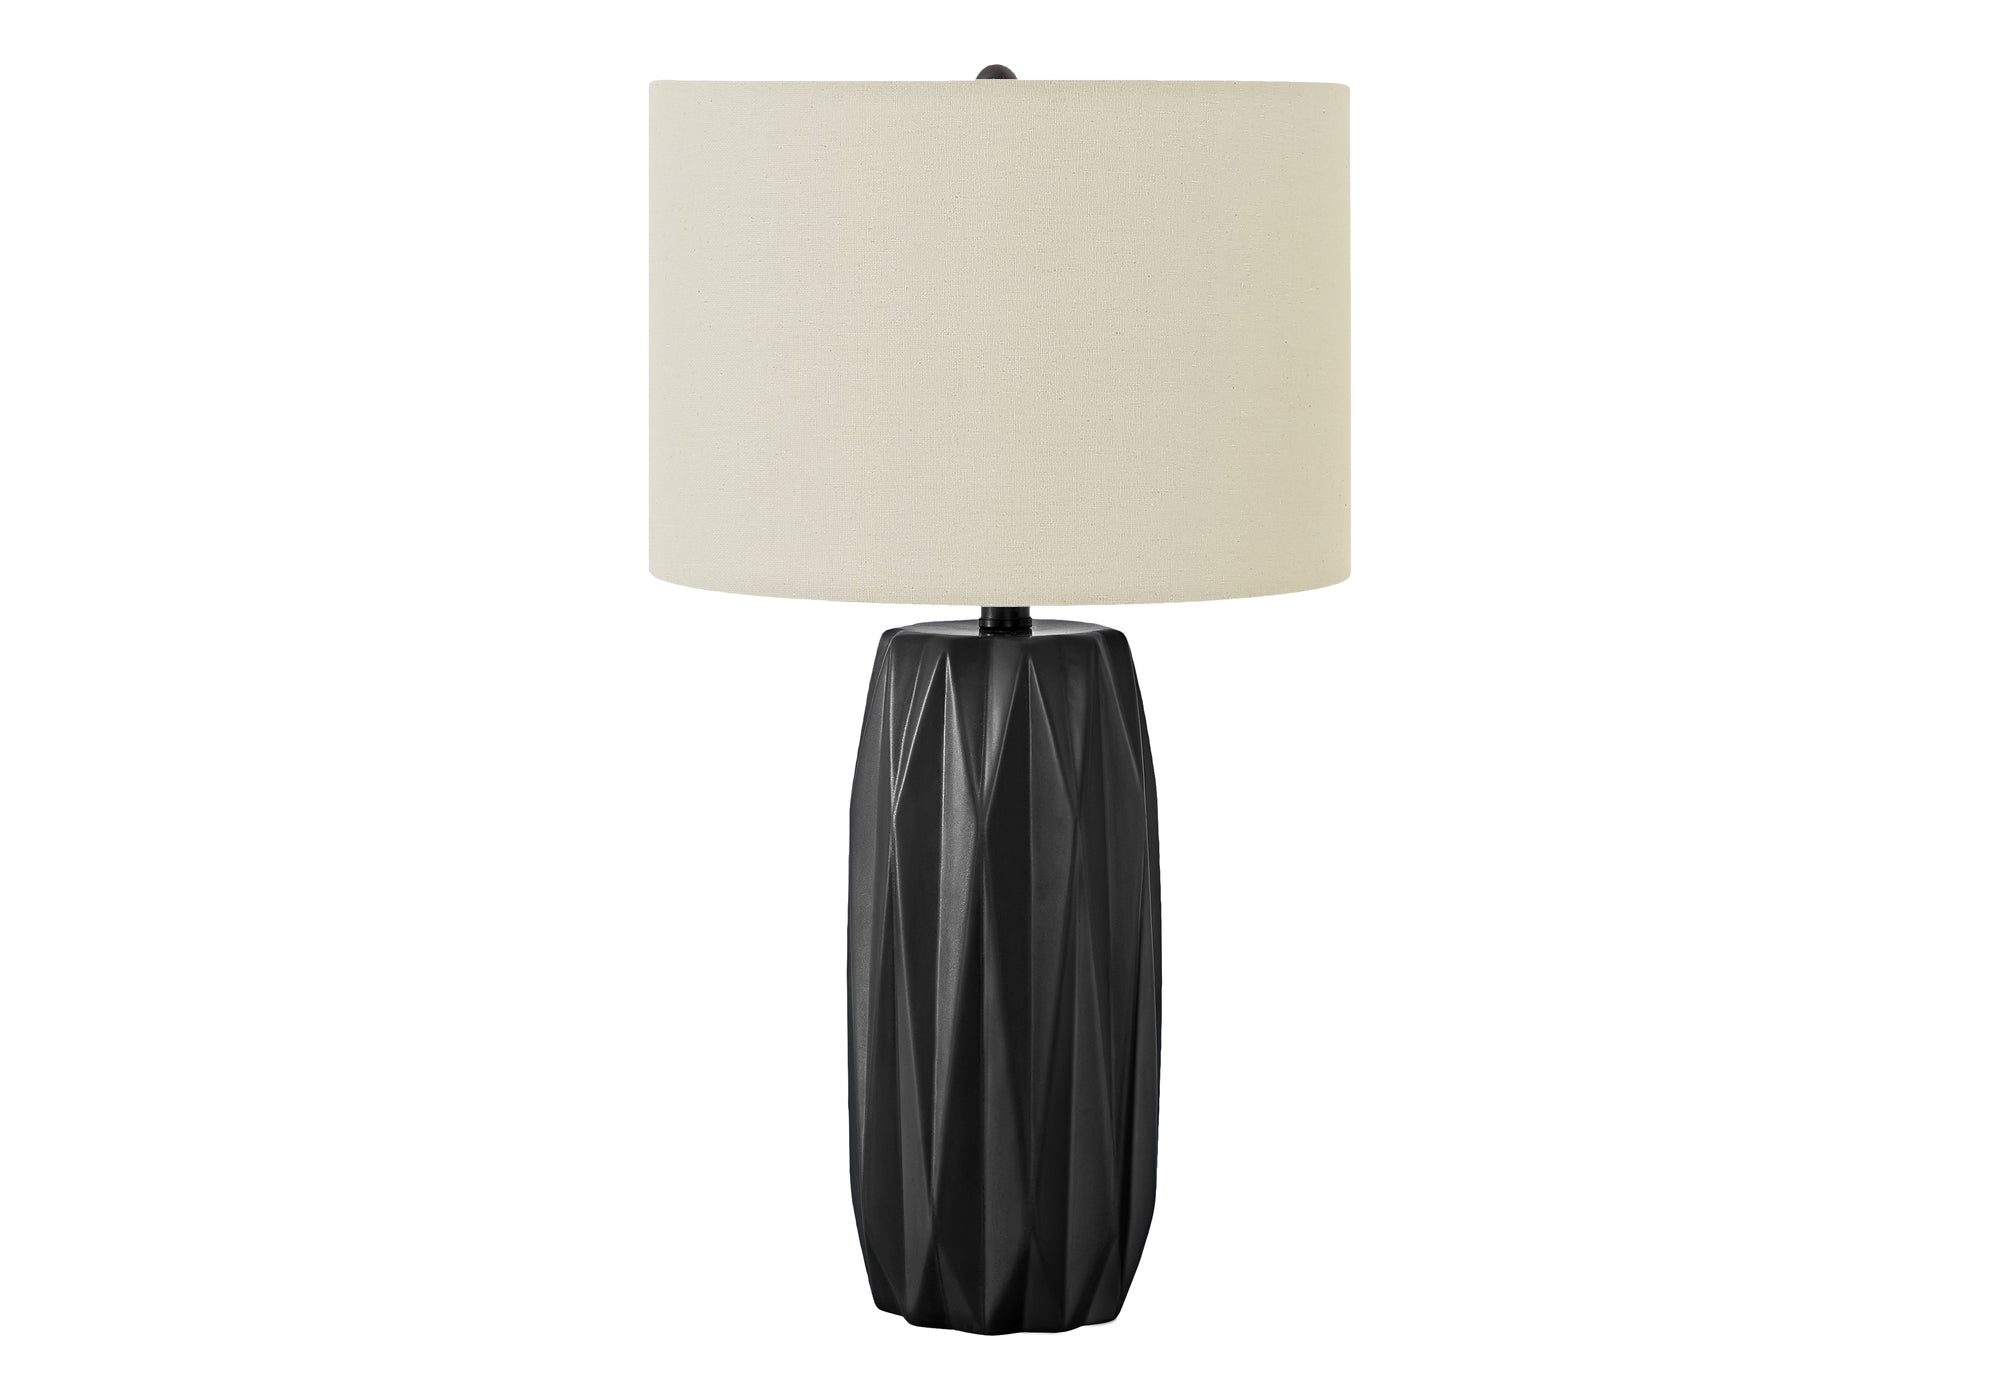 MN-939620    Lighting, 25"H, Table Lamp, Black Ceramic, Ivory / Cream Shade, Contemporary